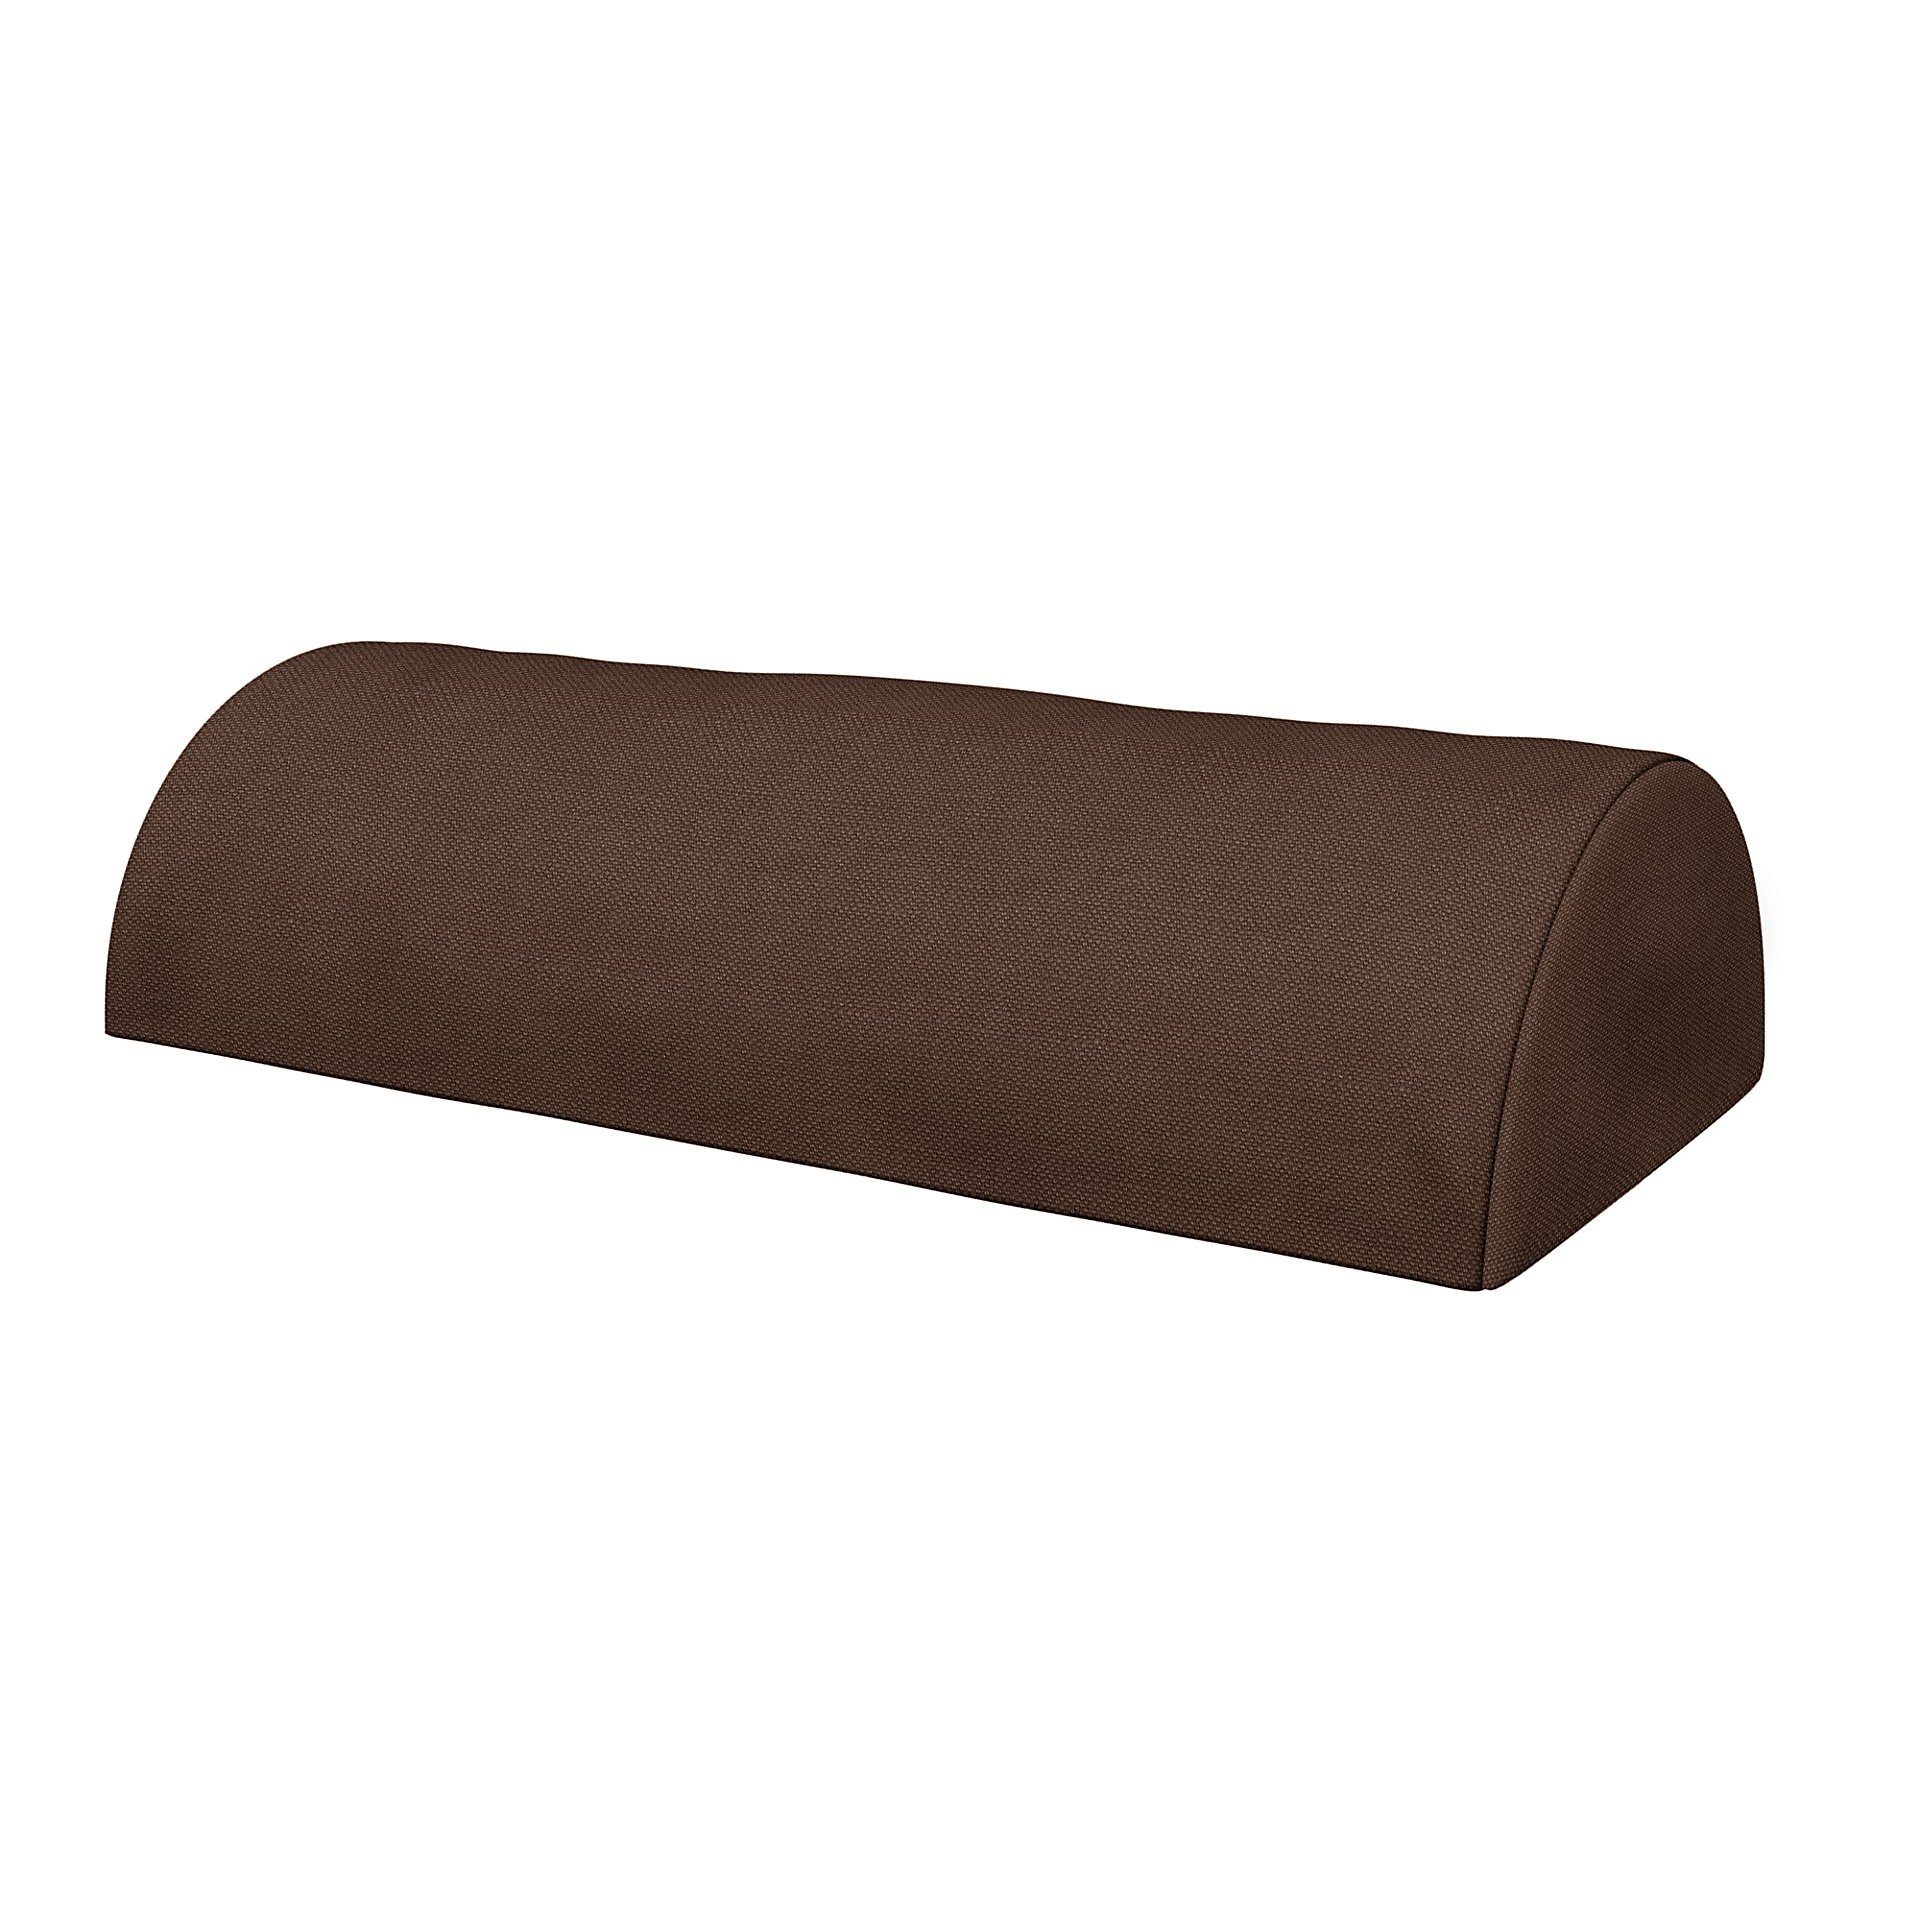 IKEA - Cushion Cover Beddinge Half Moon , Chocolate, Linen - Bemz